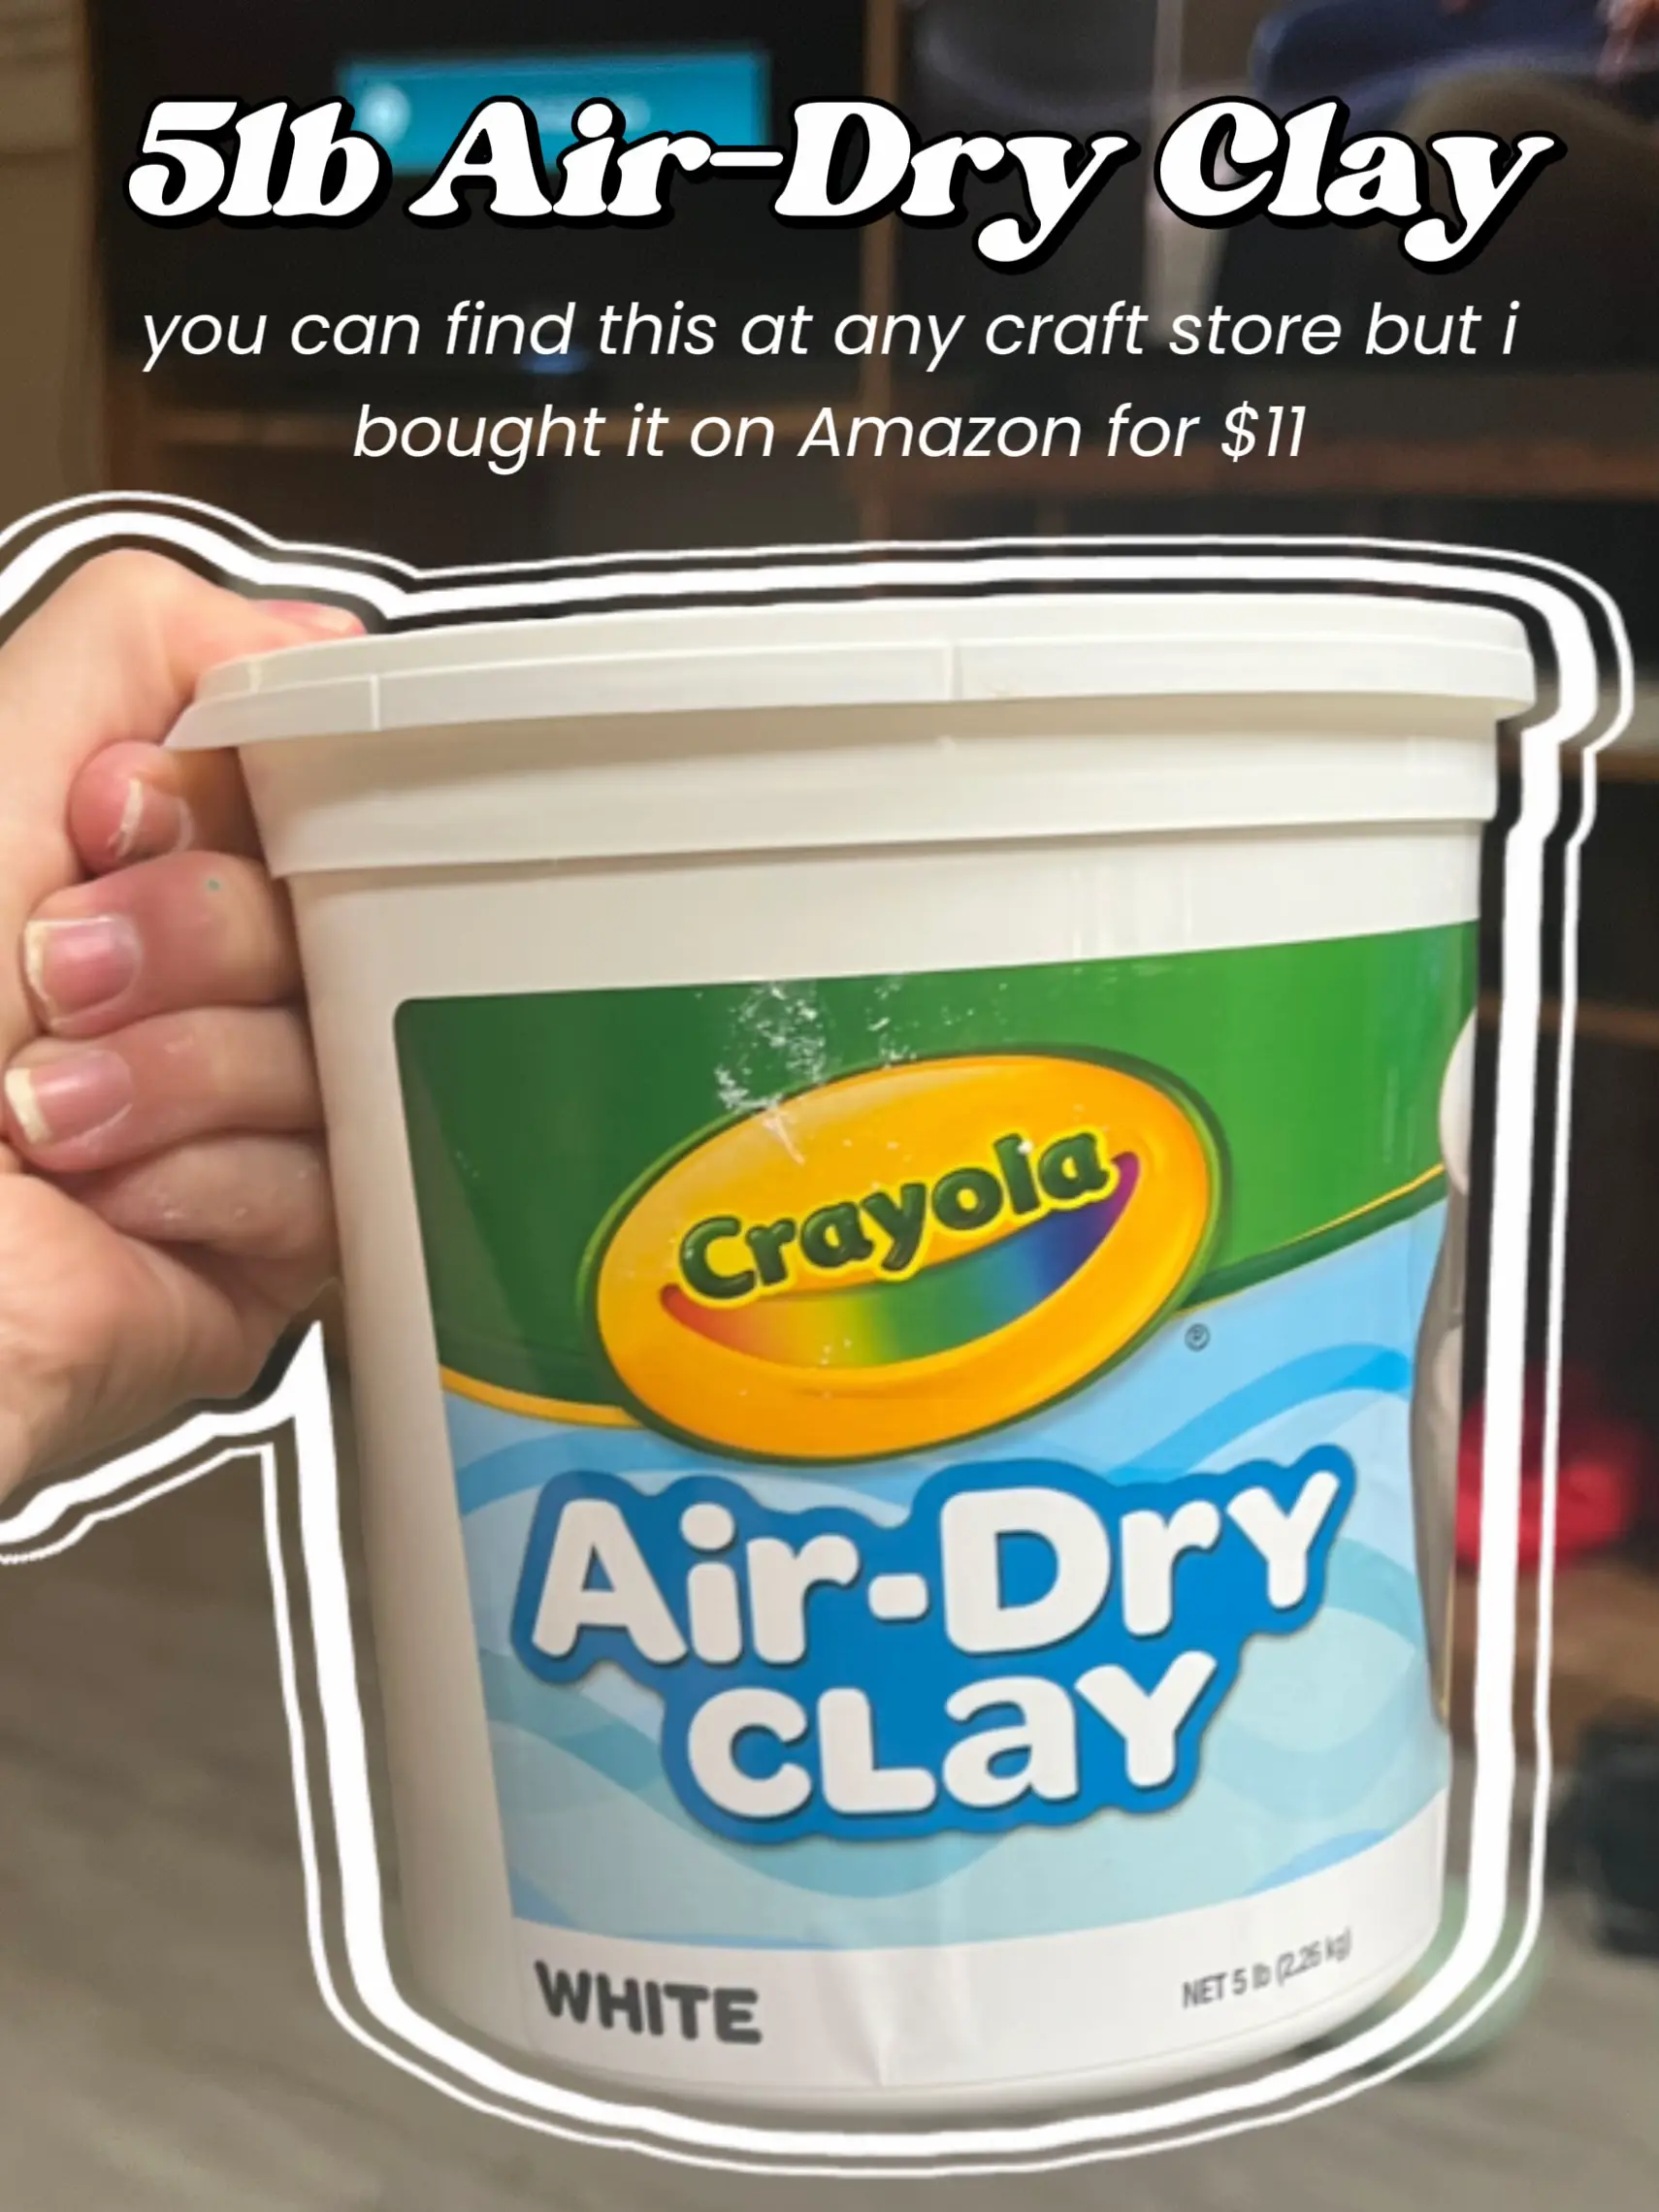 Crayola Air Dry Clay - 5 Lb Bucket, Natural White Italy